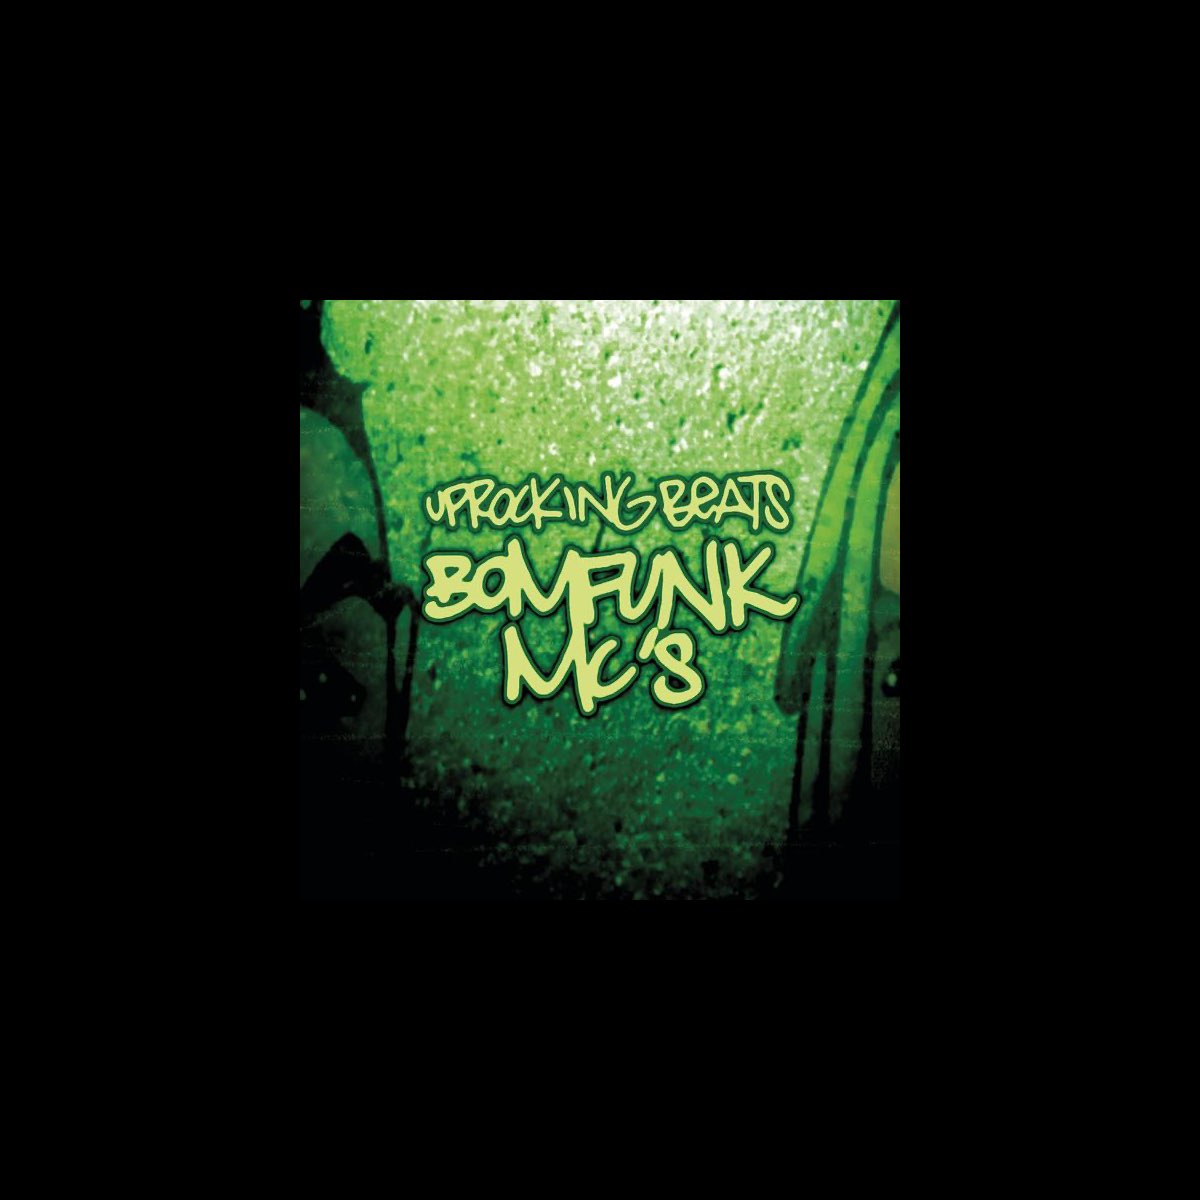 Uprocking Beats - EP by Bomfunk MC's on Apple Music